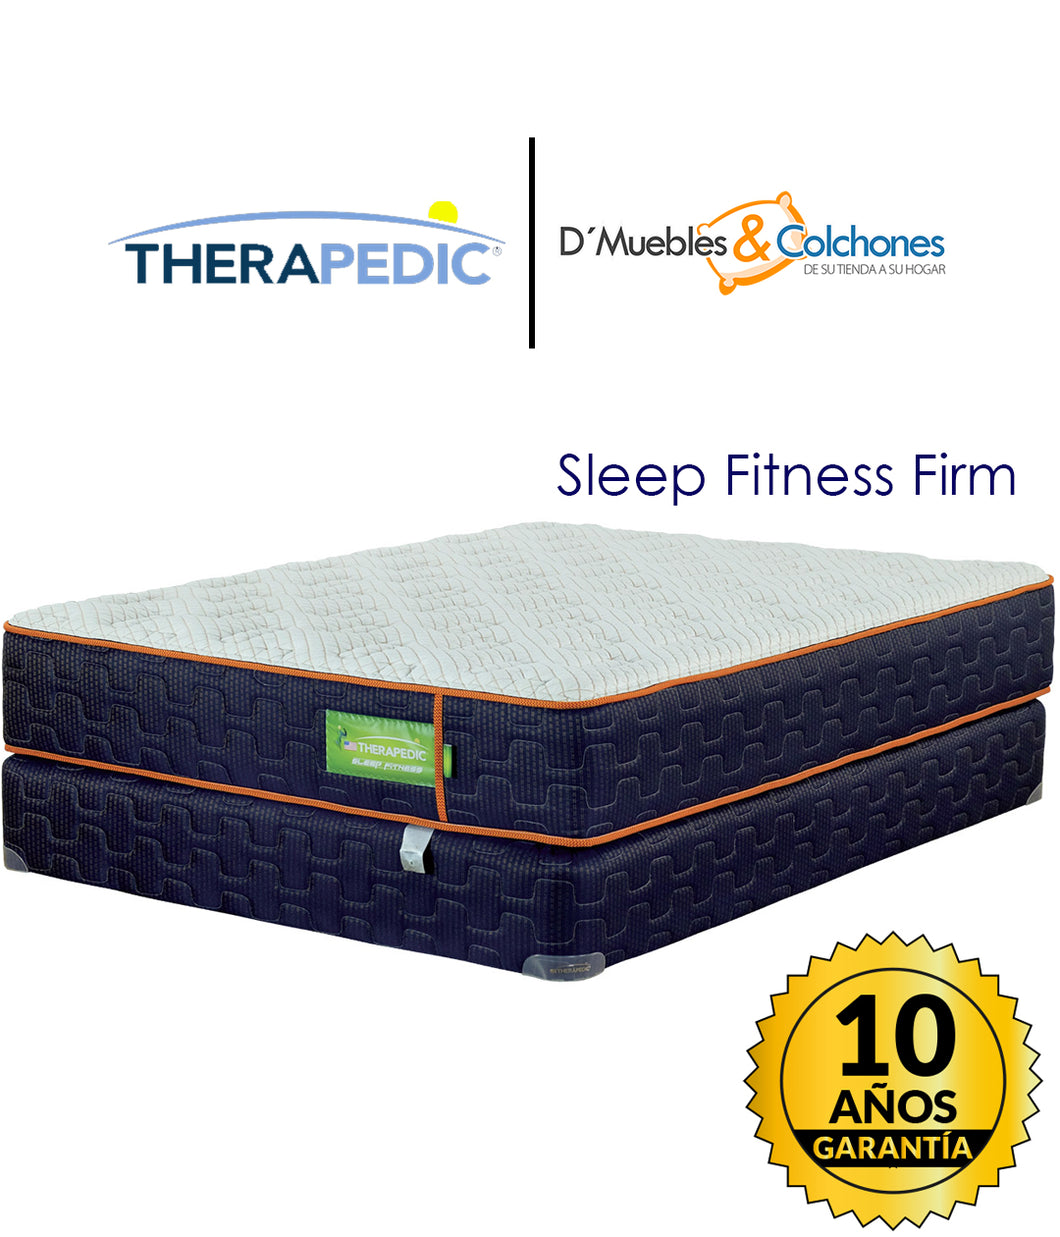 Therapedic Sleep Fitness - Firm